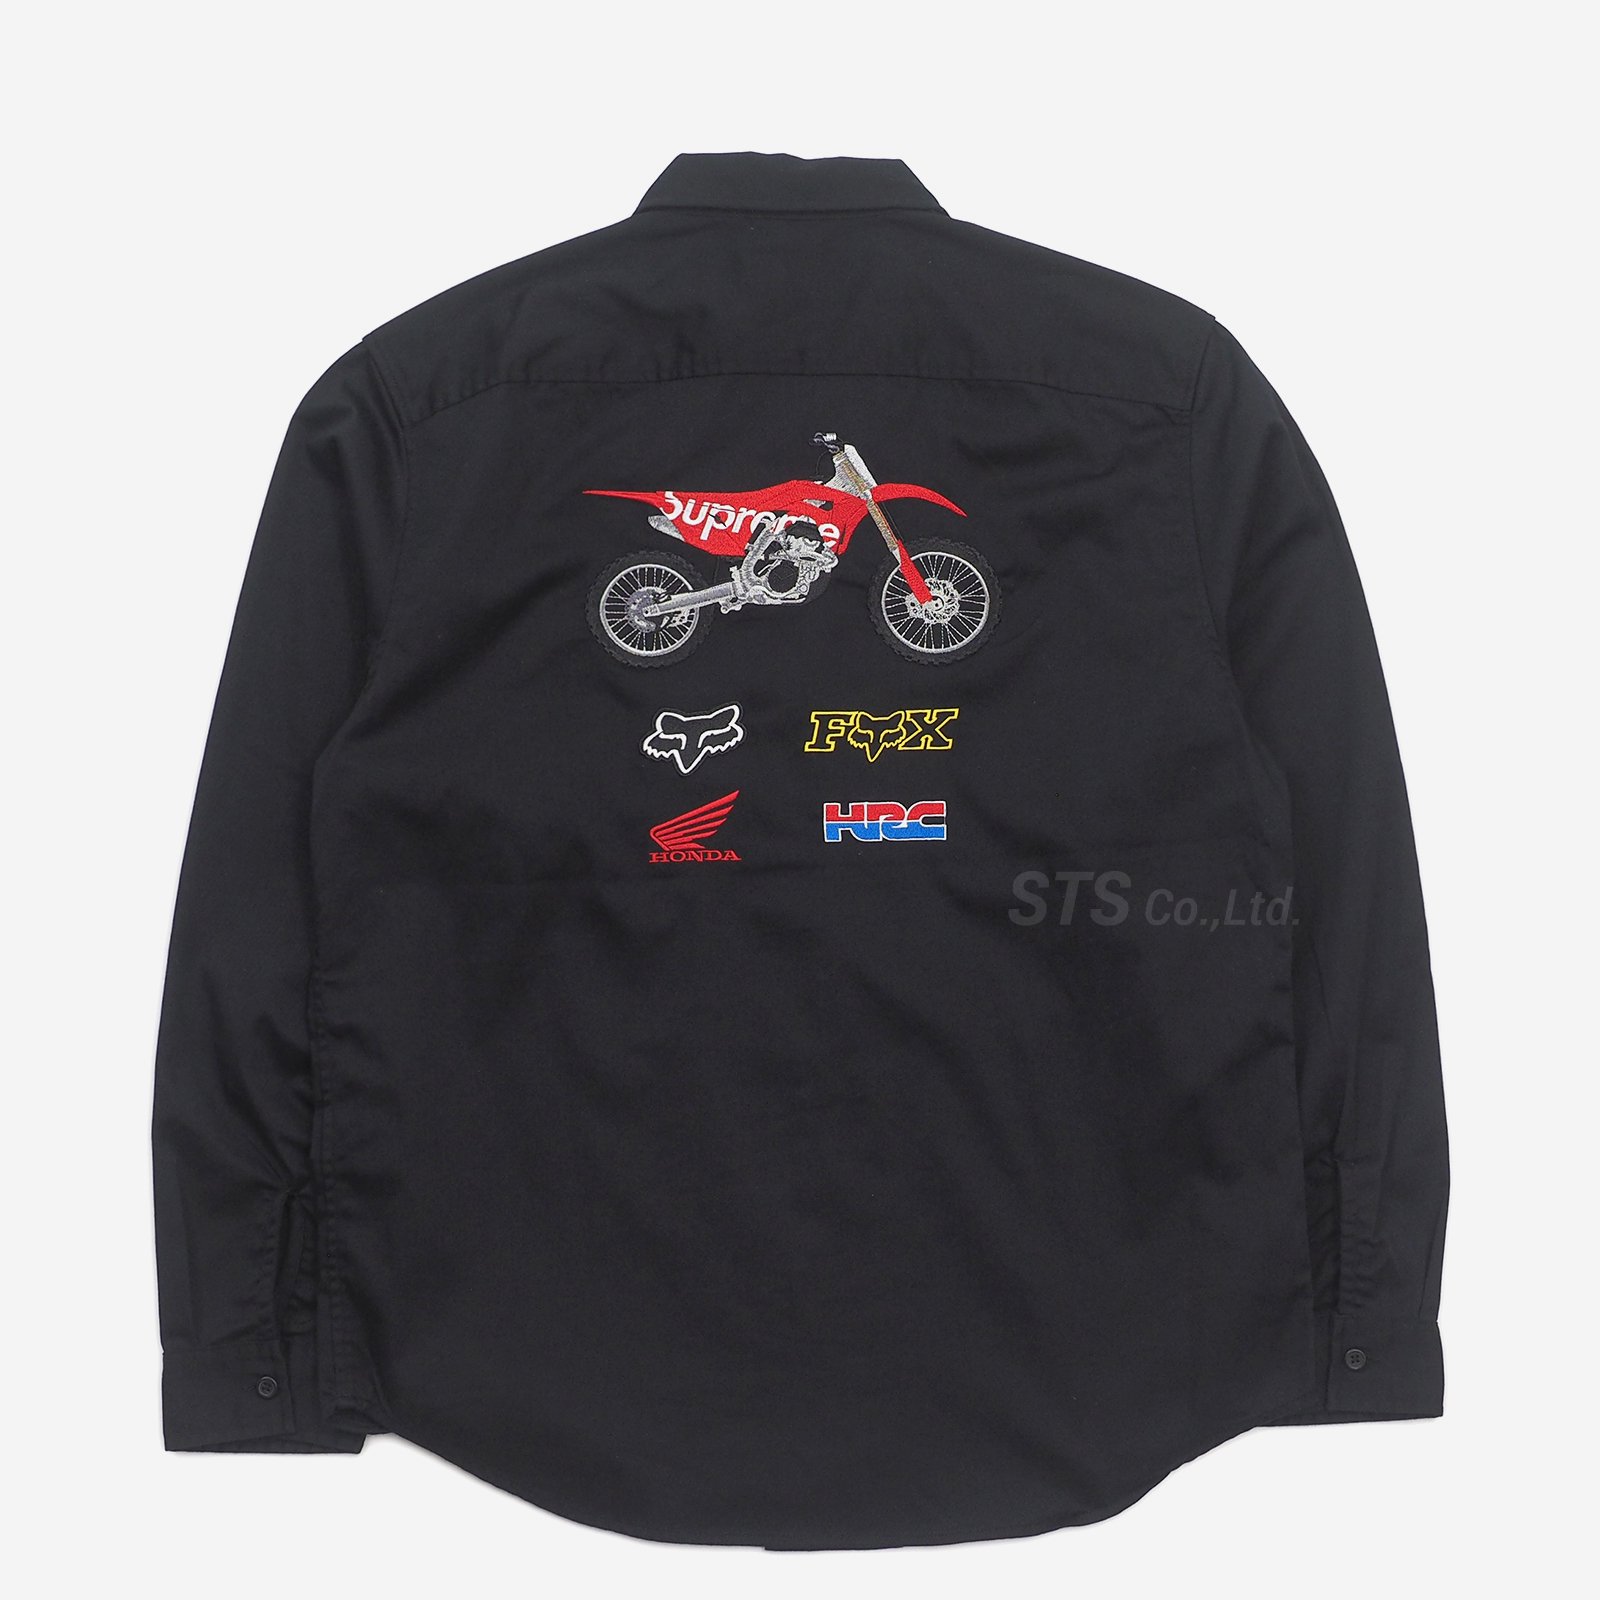 Supreme/Honda/Fox Racing Work Shirt - ParkSIDER